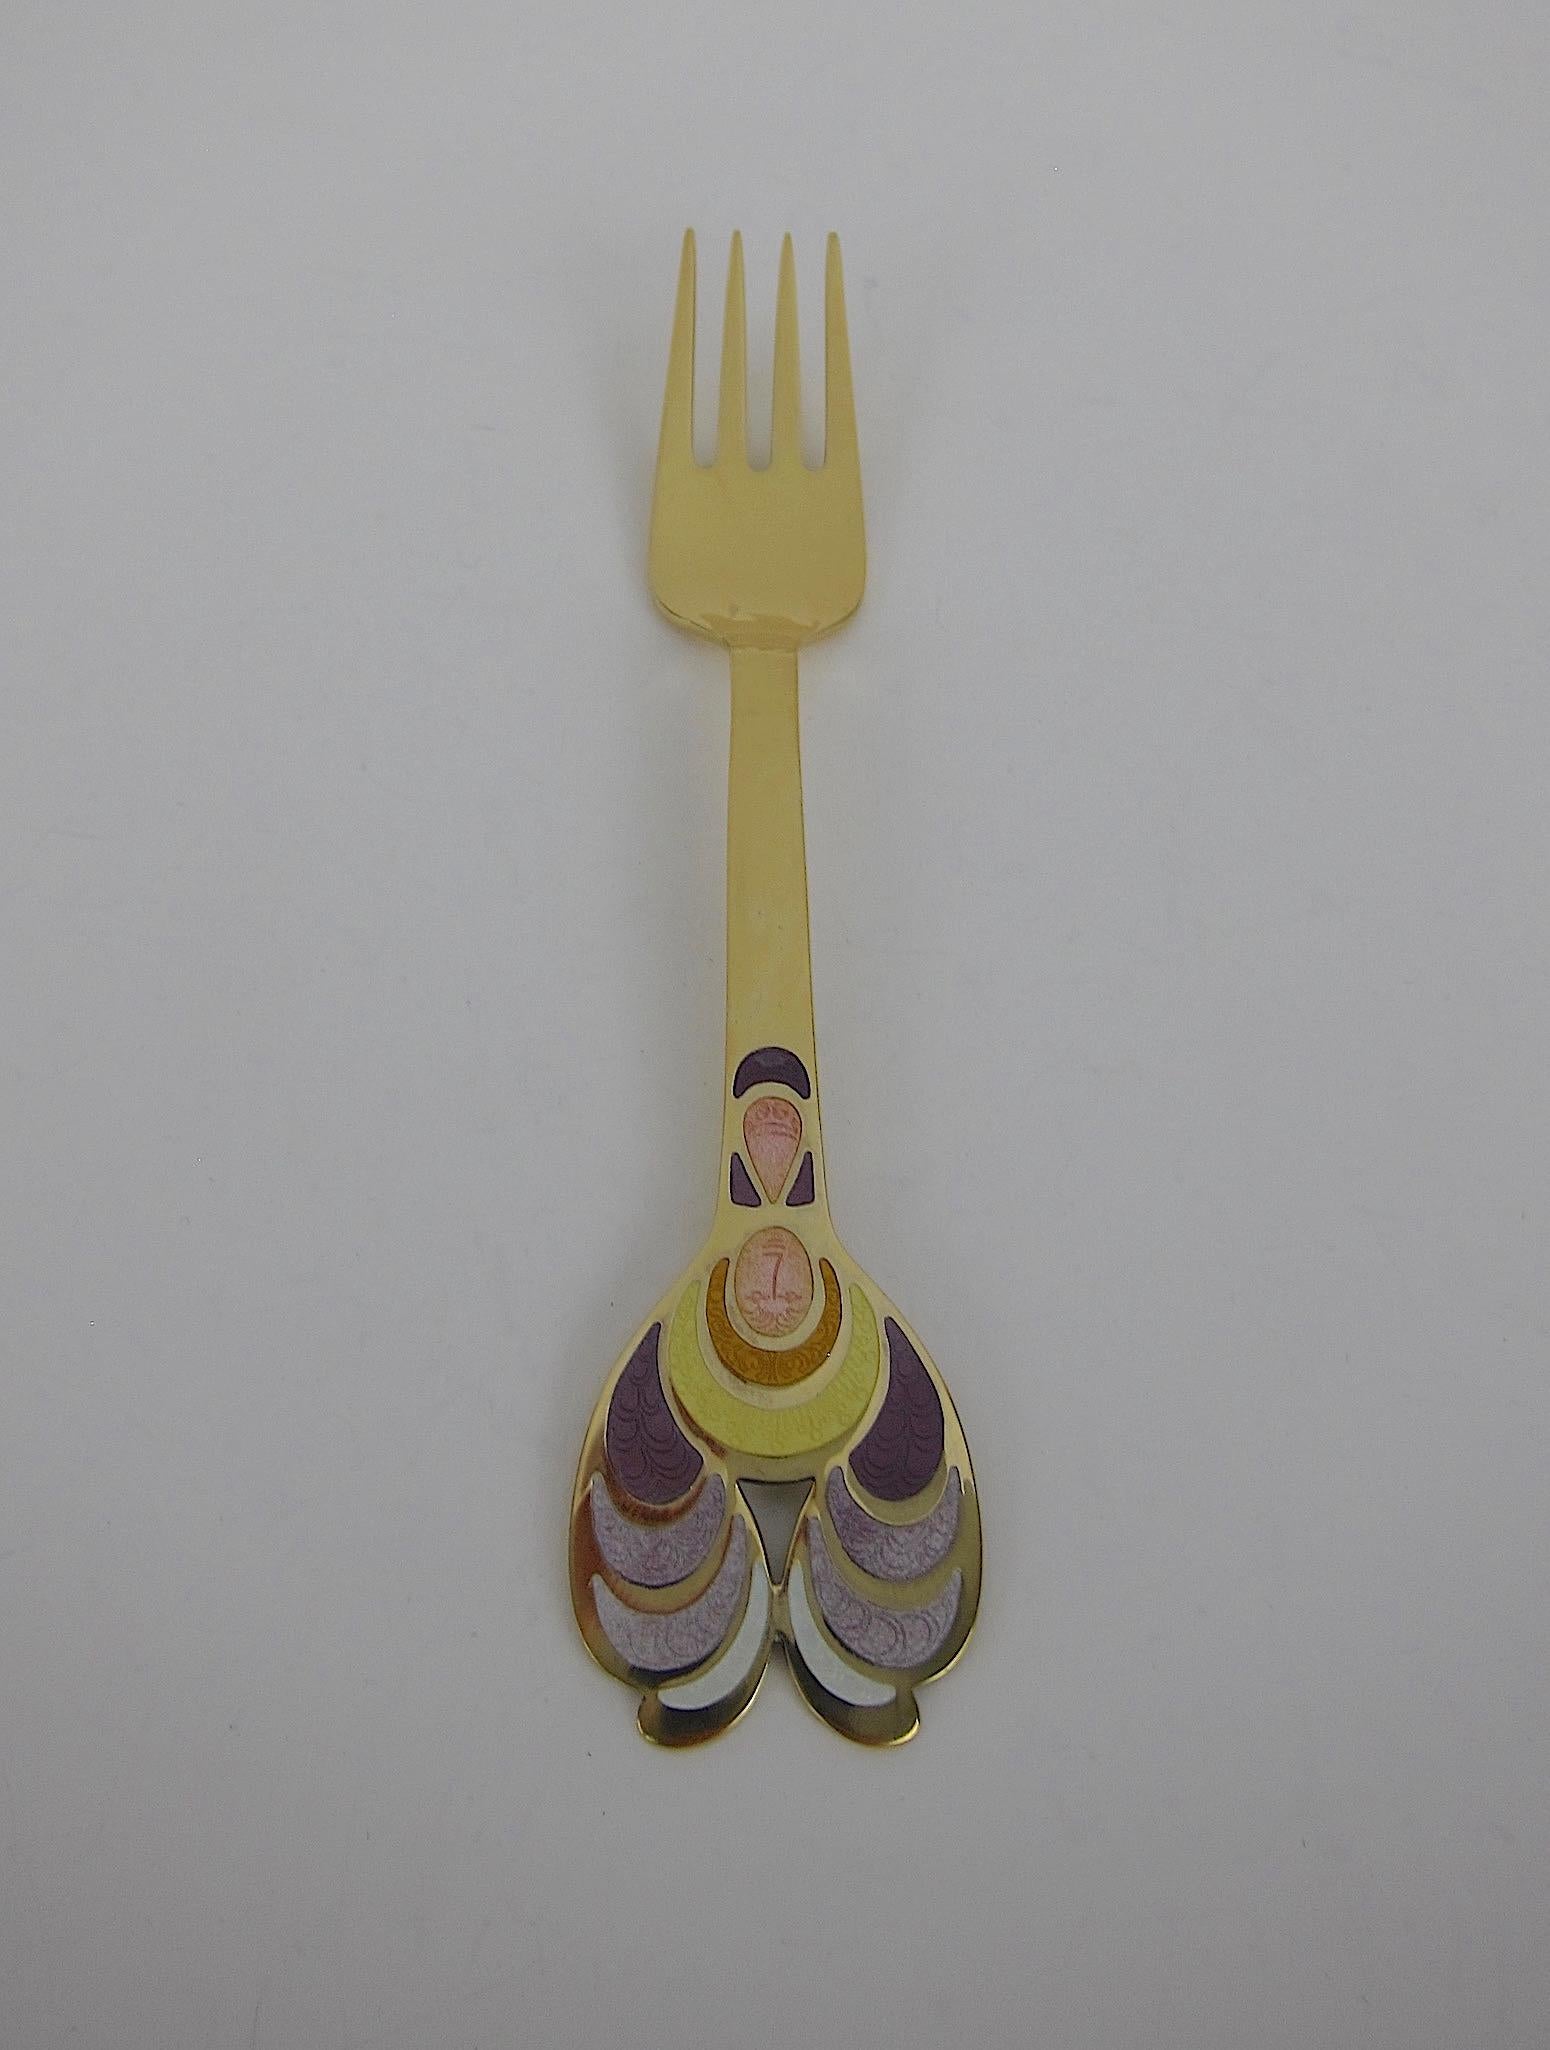 A Danish gilded sterling silver and enamel Christmas fork from Anton Michelsen of Copenhagen, Denmark. Bjorn Wiinblad created this 